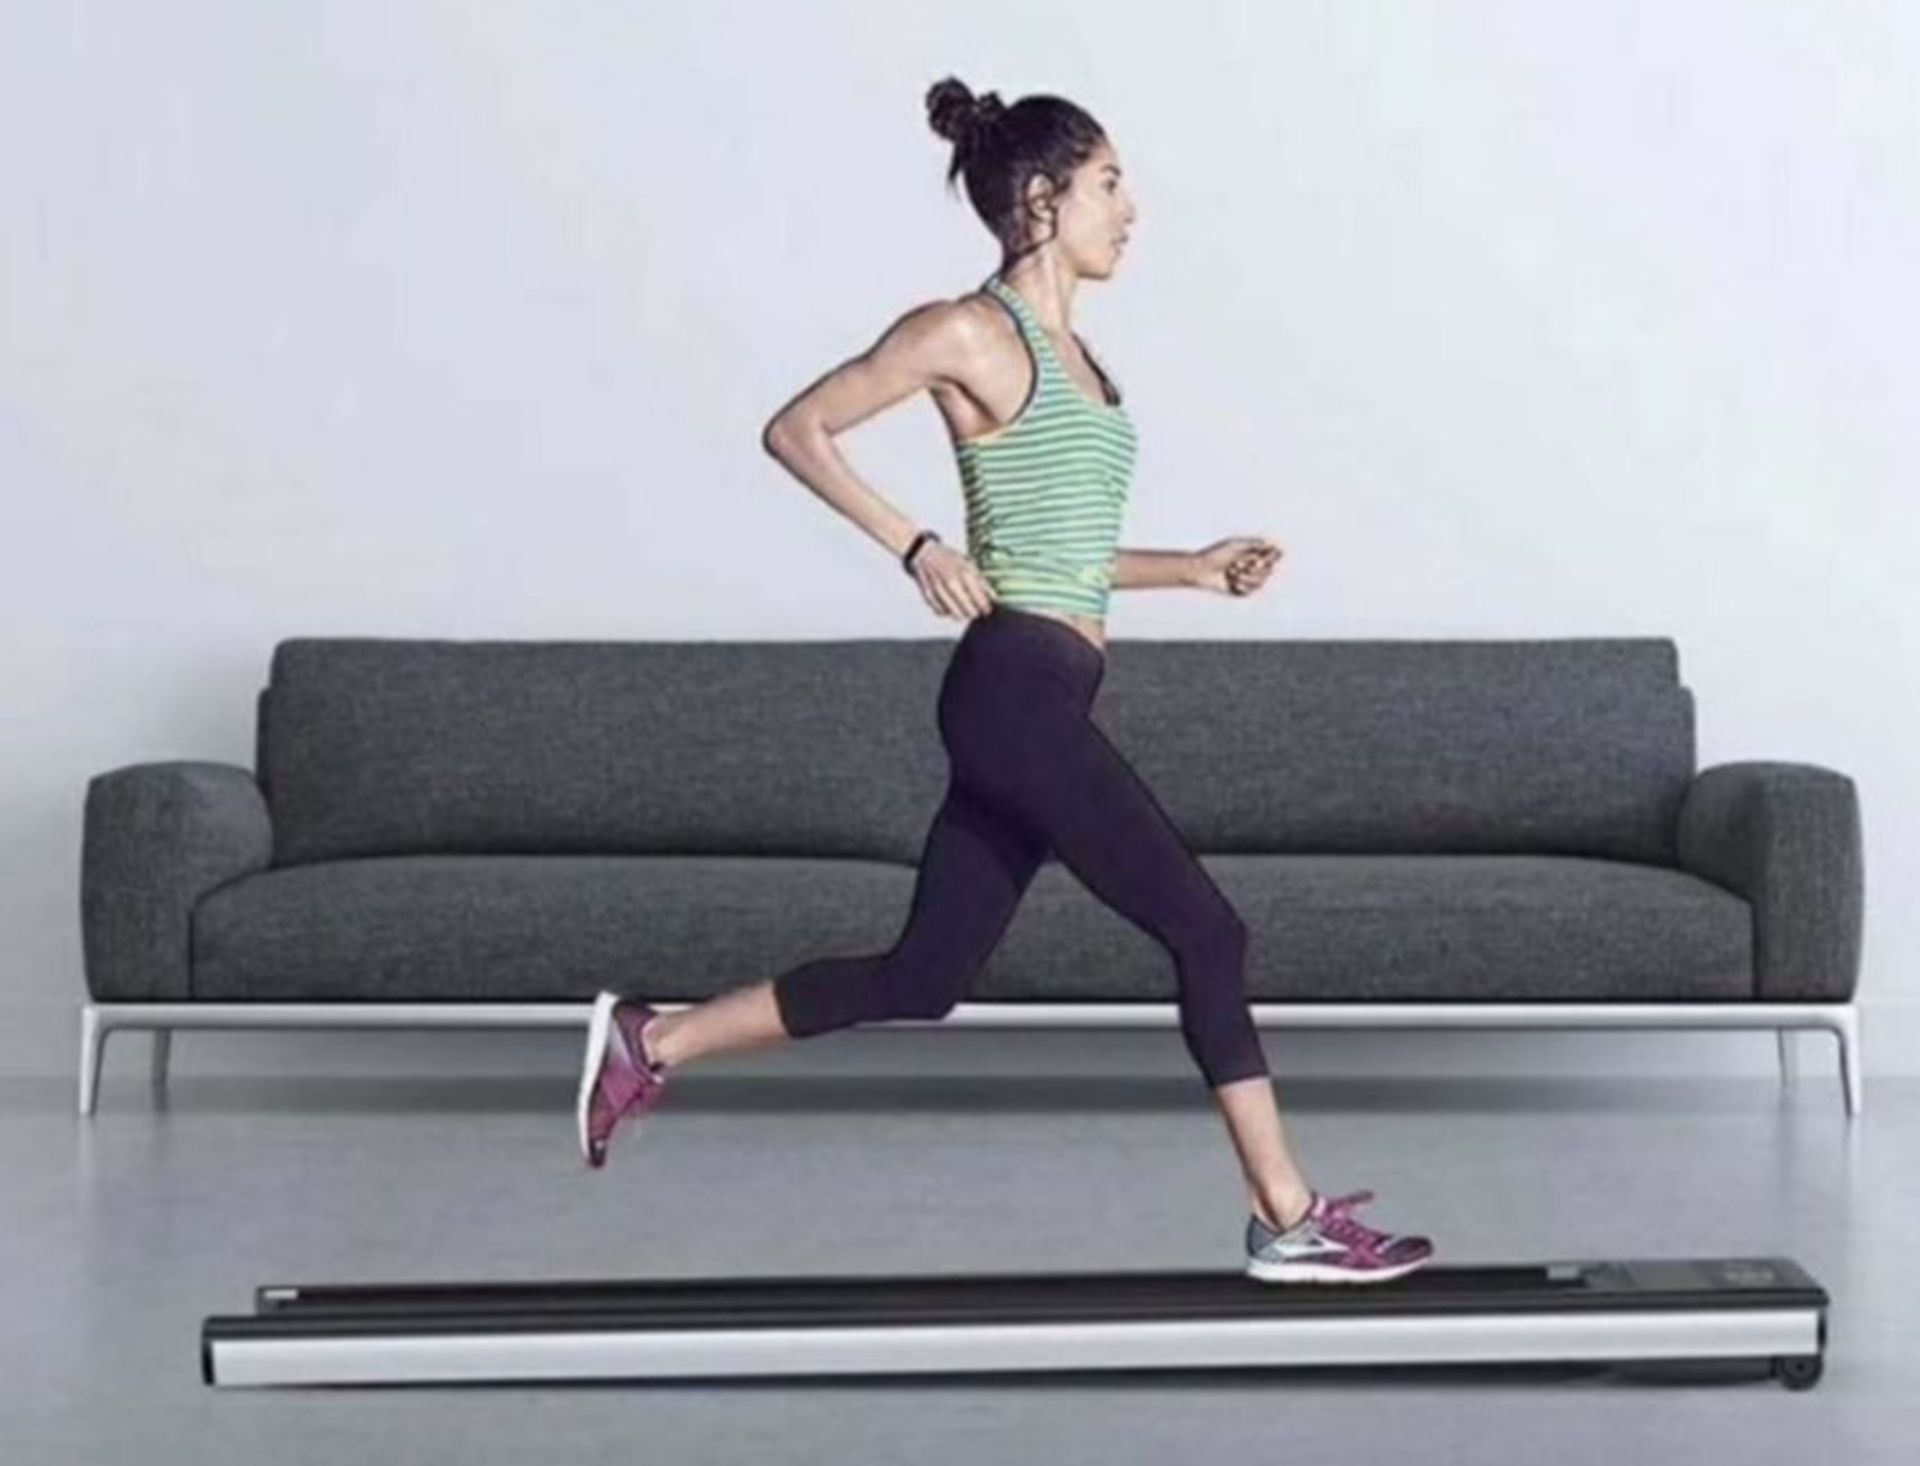 1 x Slim Tread Ultra Thin Smart Treadmill Running / Walking Machine - Lightweight With Folding - Image 5 of 10